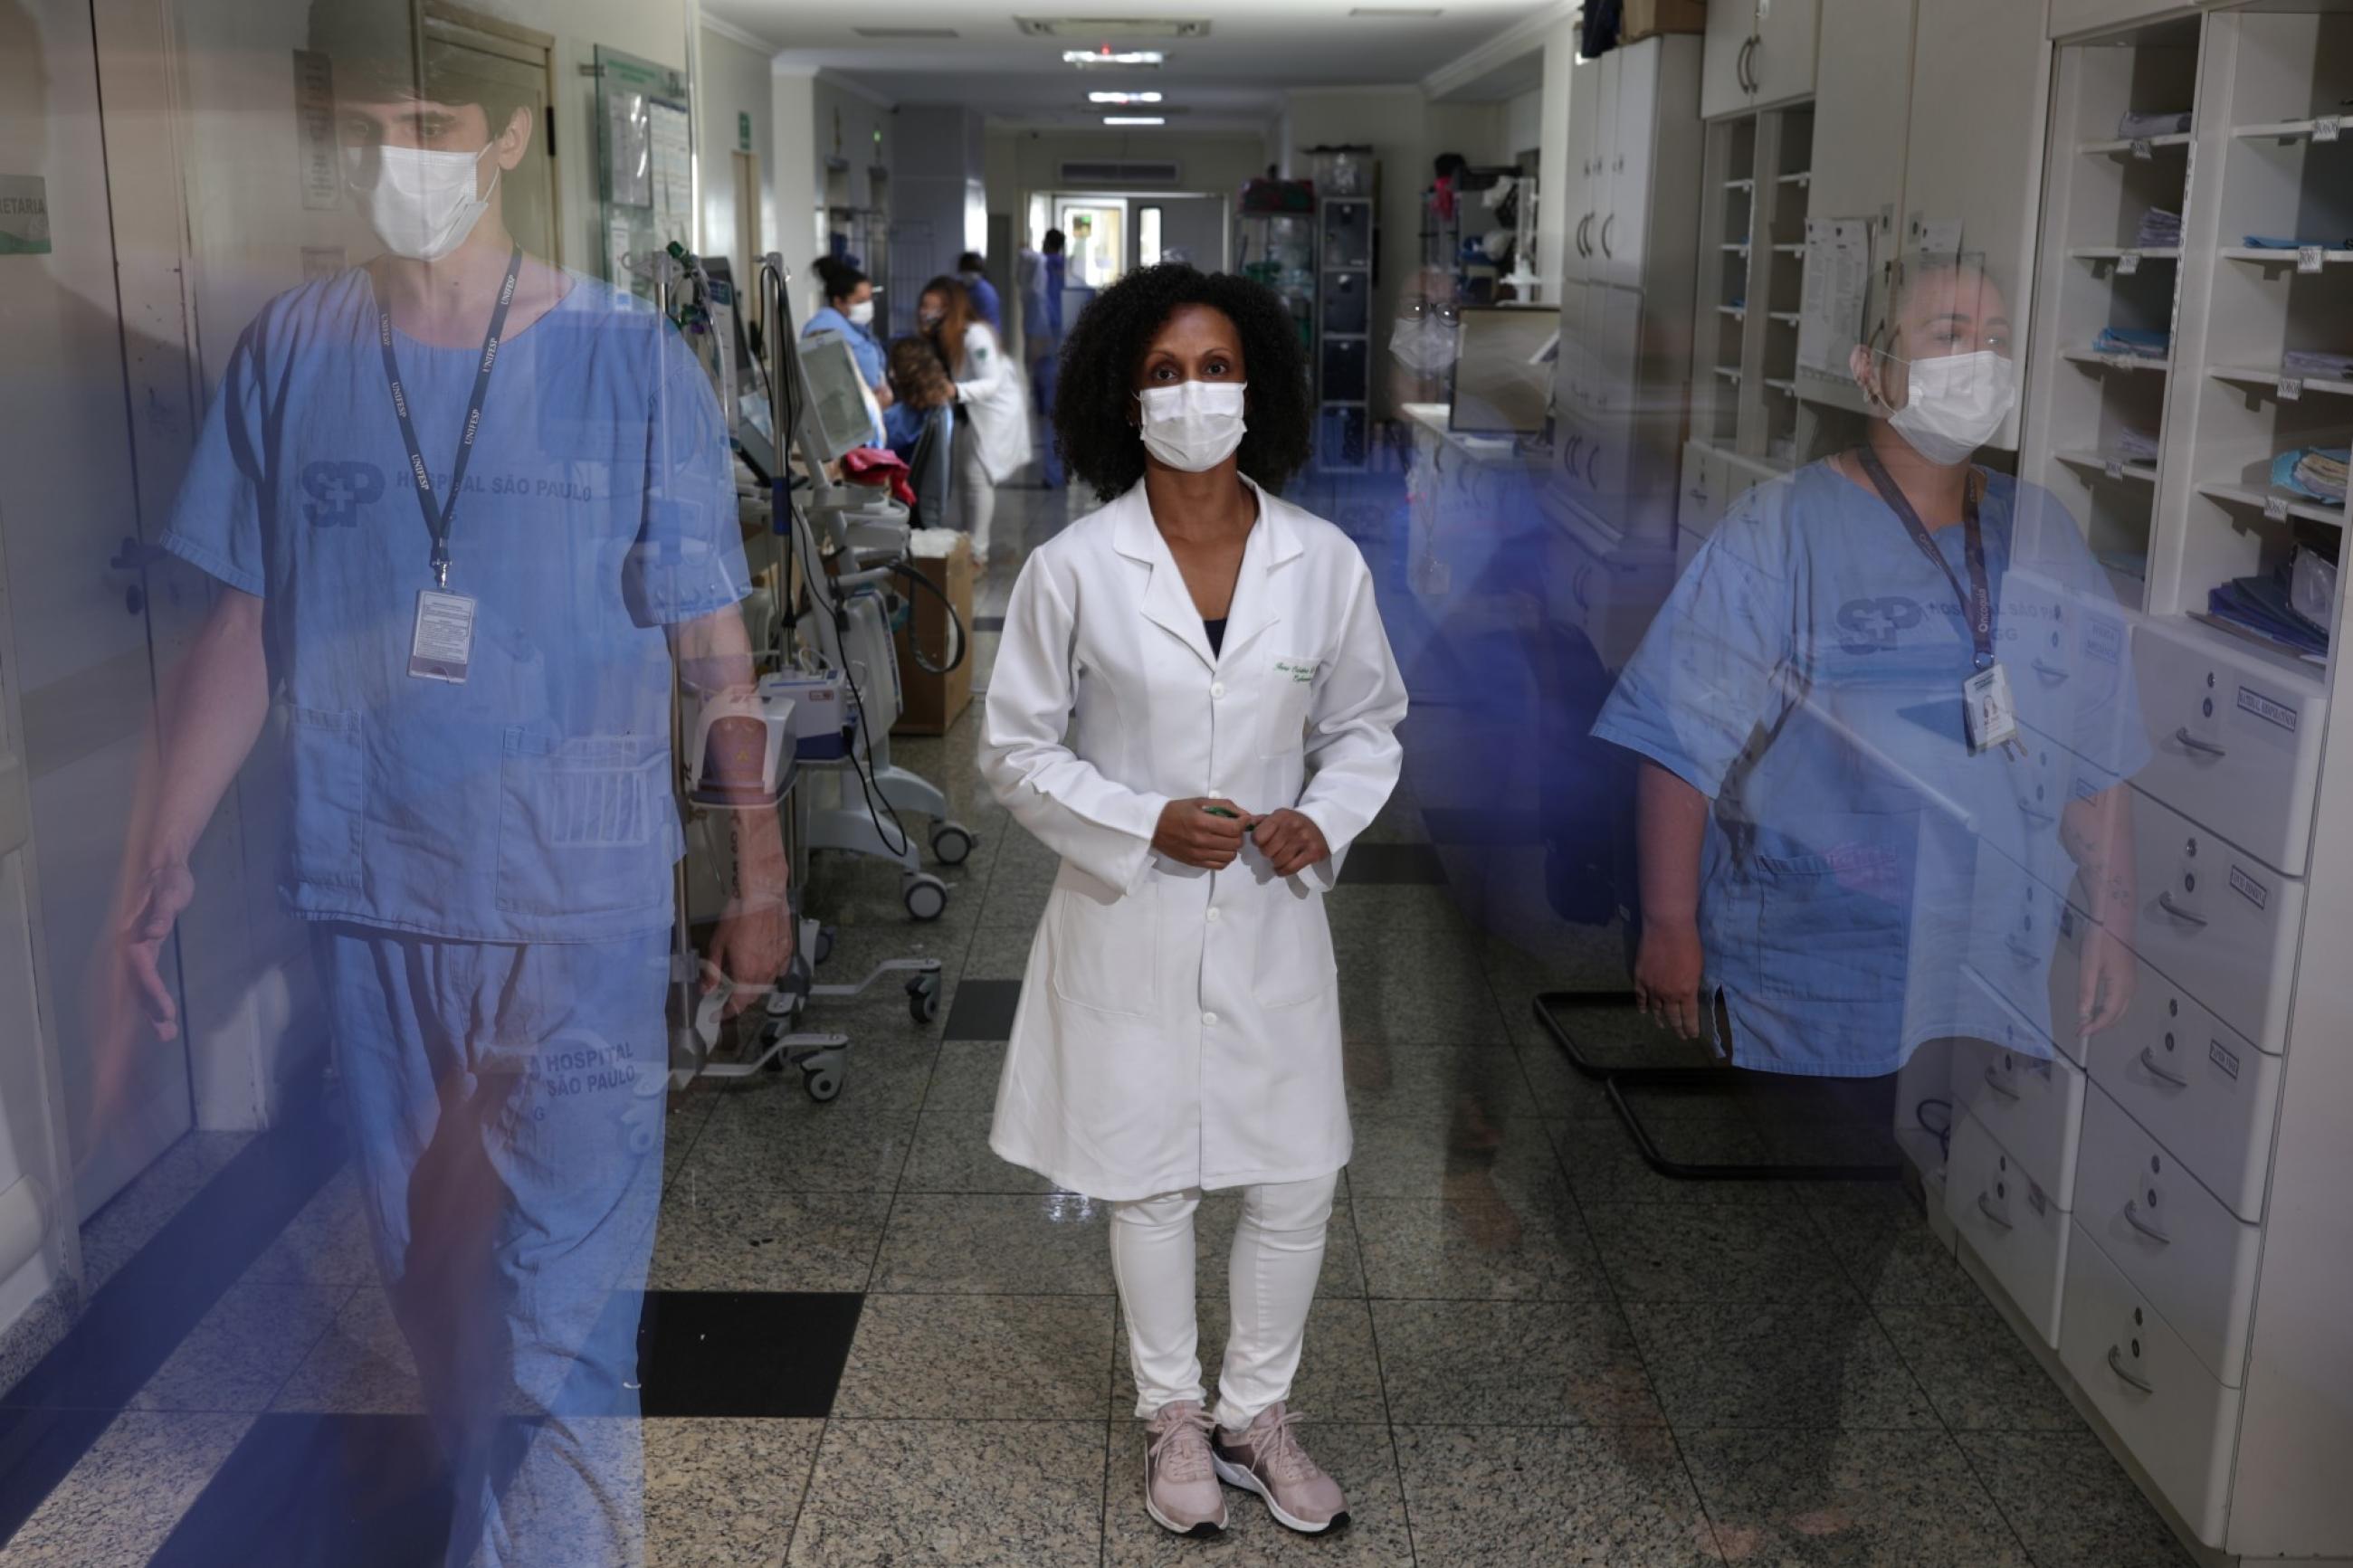 Jane Cristina Dias Alves, 43, a nurse, a volunteer in COVID-19 vaccine trial for AstraZeneca, poses for a photograph in Sao Paulo, Brazil, December 11, 2020.